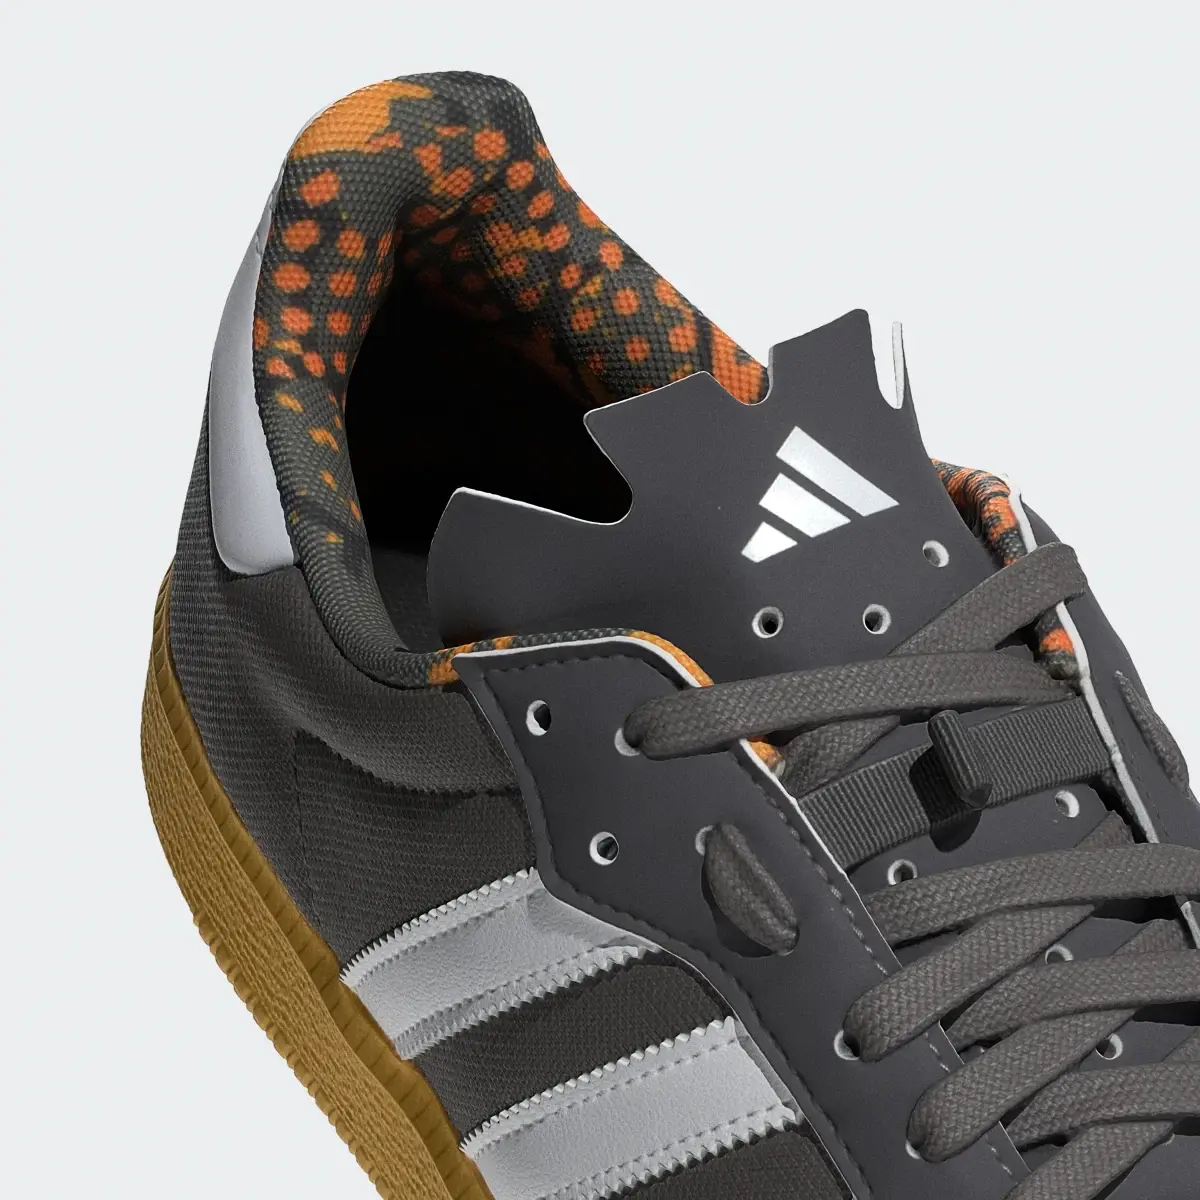 Adidas Velosamba Made With Nature Cycling Shoes. 3